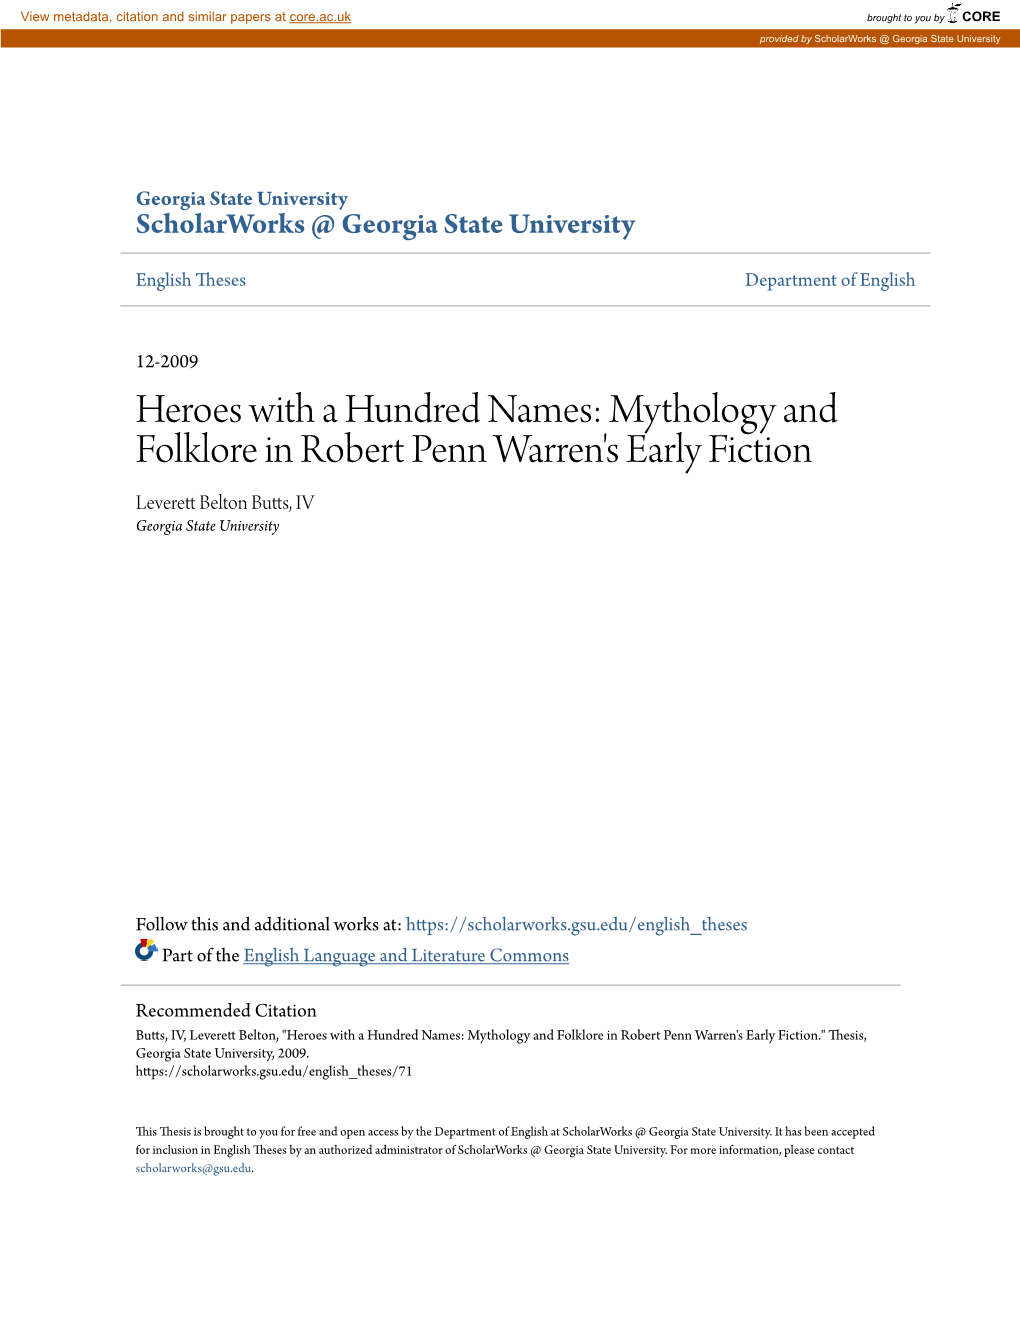 Mythology and Folklore in Robert Penn Warren's Early Fiction Leverett Belton Butts, IV Georgia State University